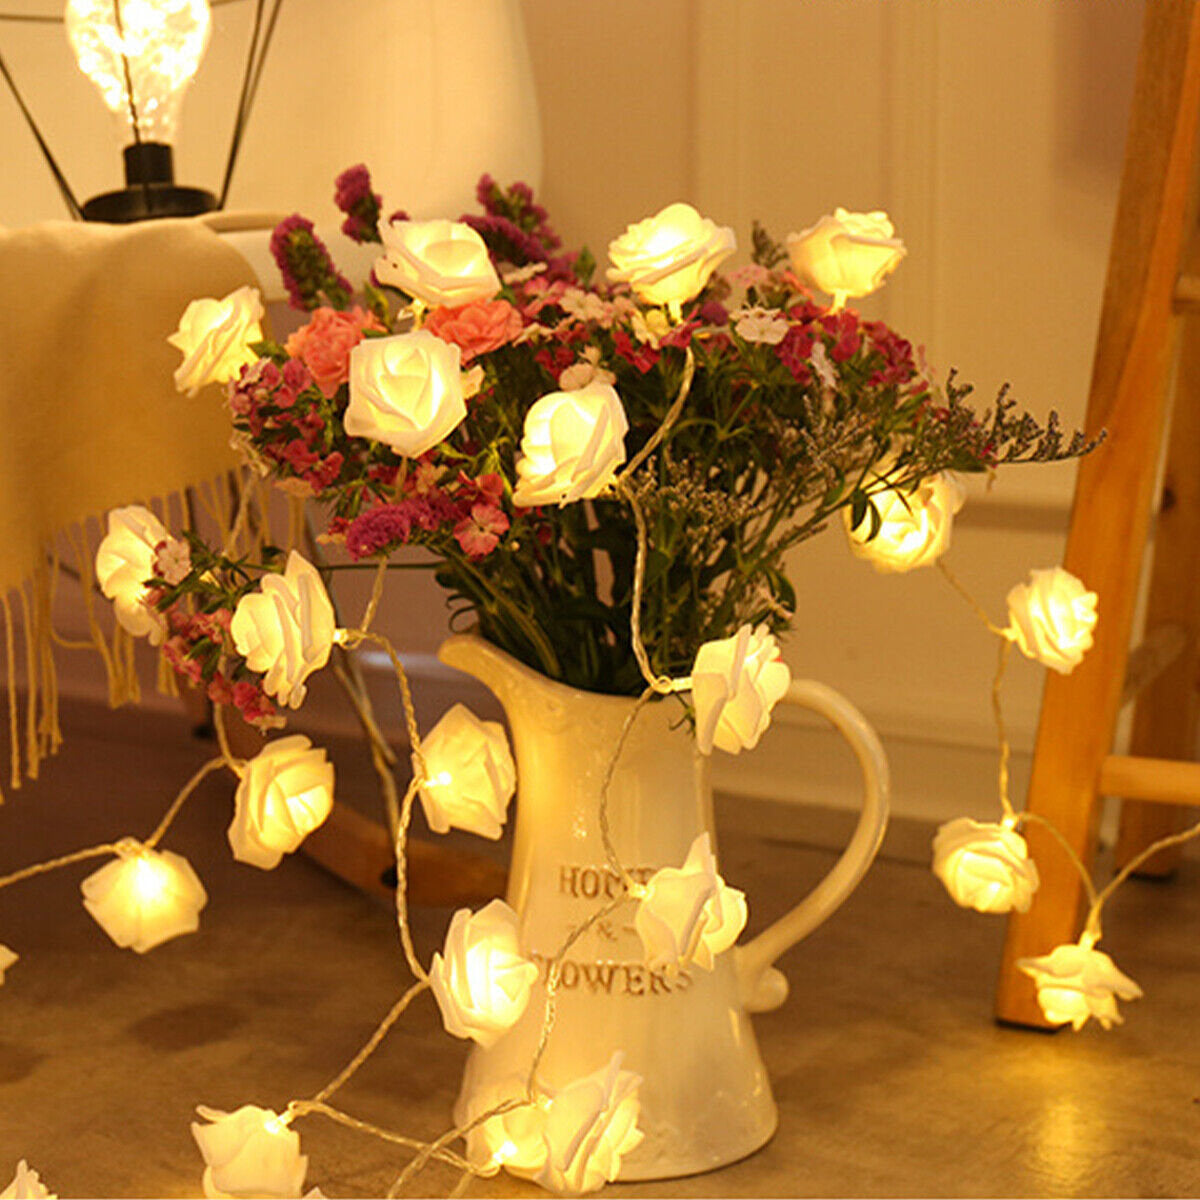 14 Led Rose Lights  Rose Flower Led Serial String Lights - 10 Feet (Warm White Plug-in)